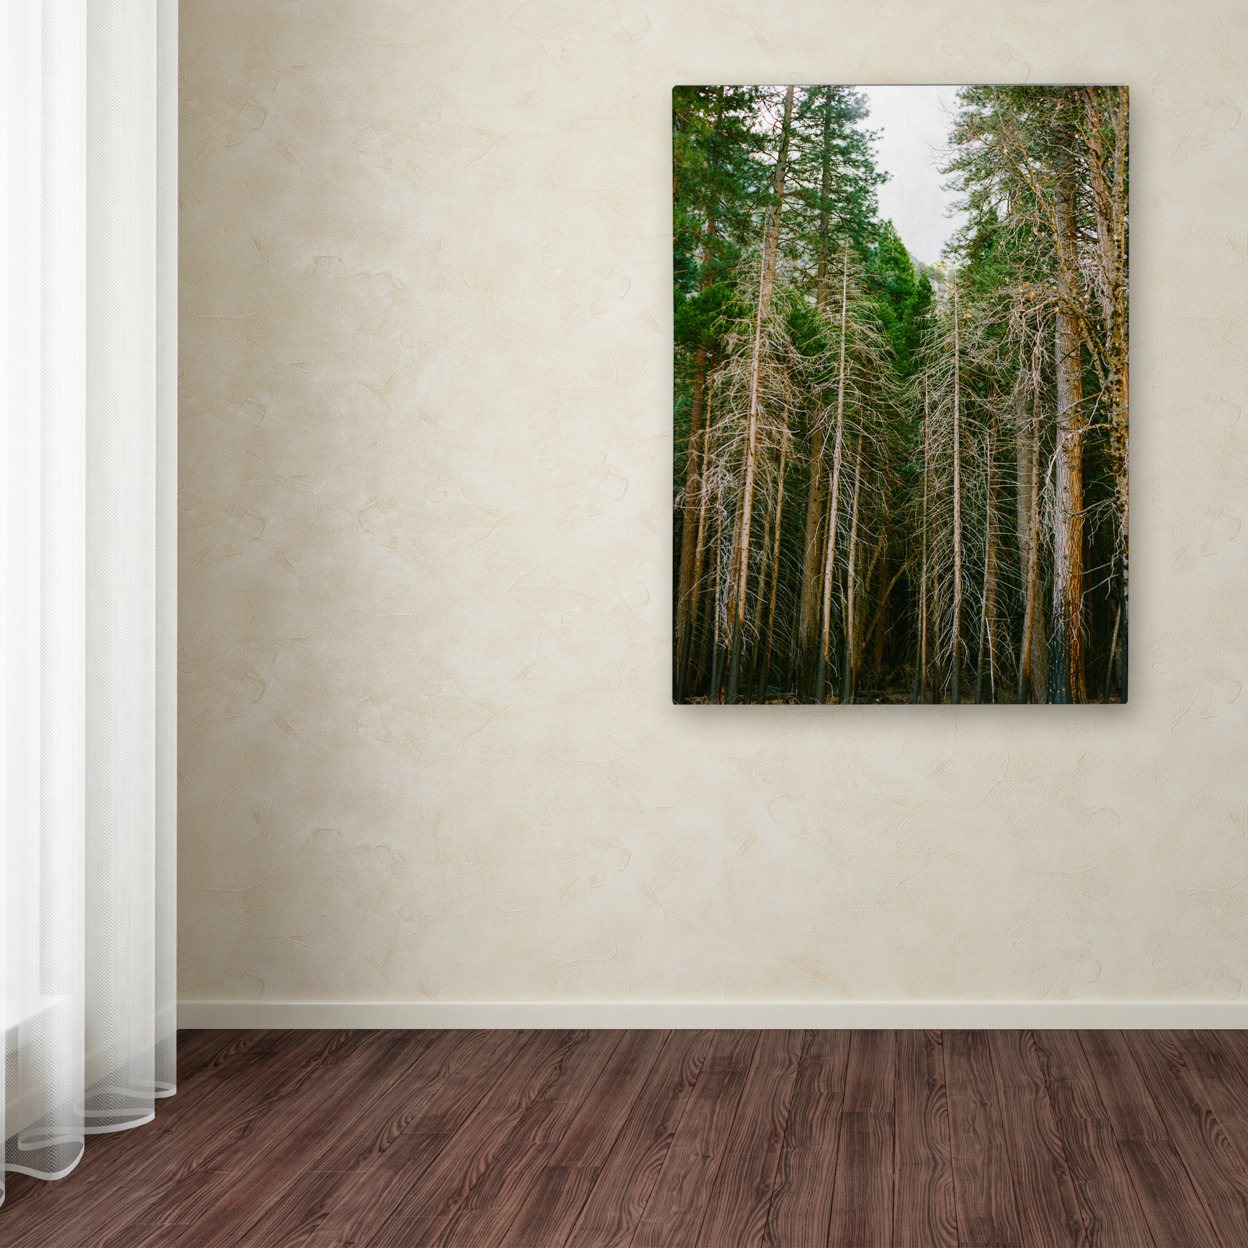 Ariane Moshayedi 'Tree Forest' Canvas Wall Art 35 X 47 Inches